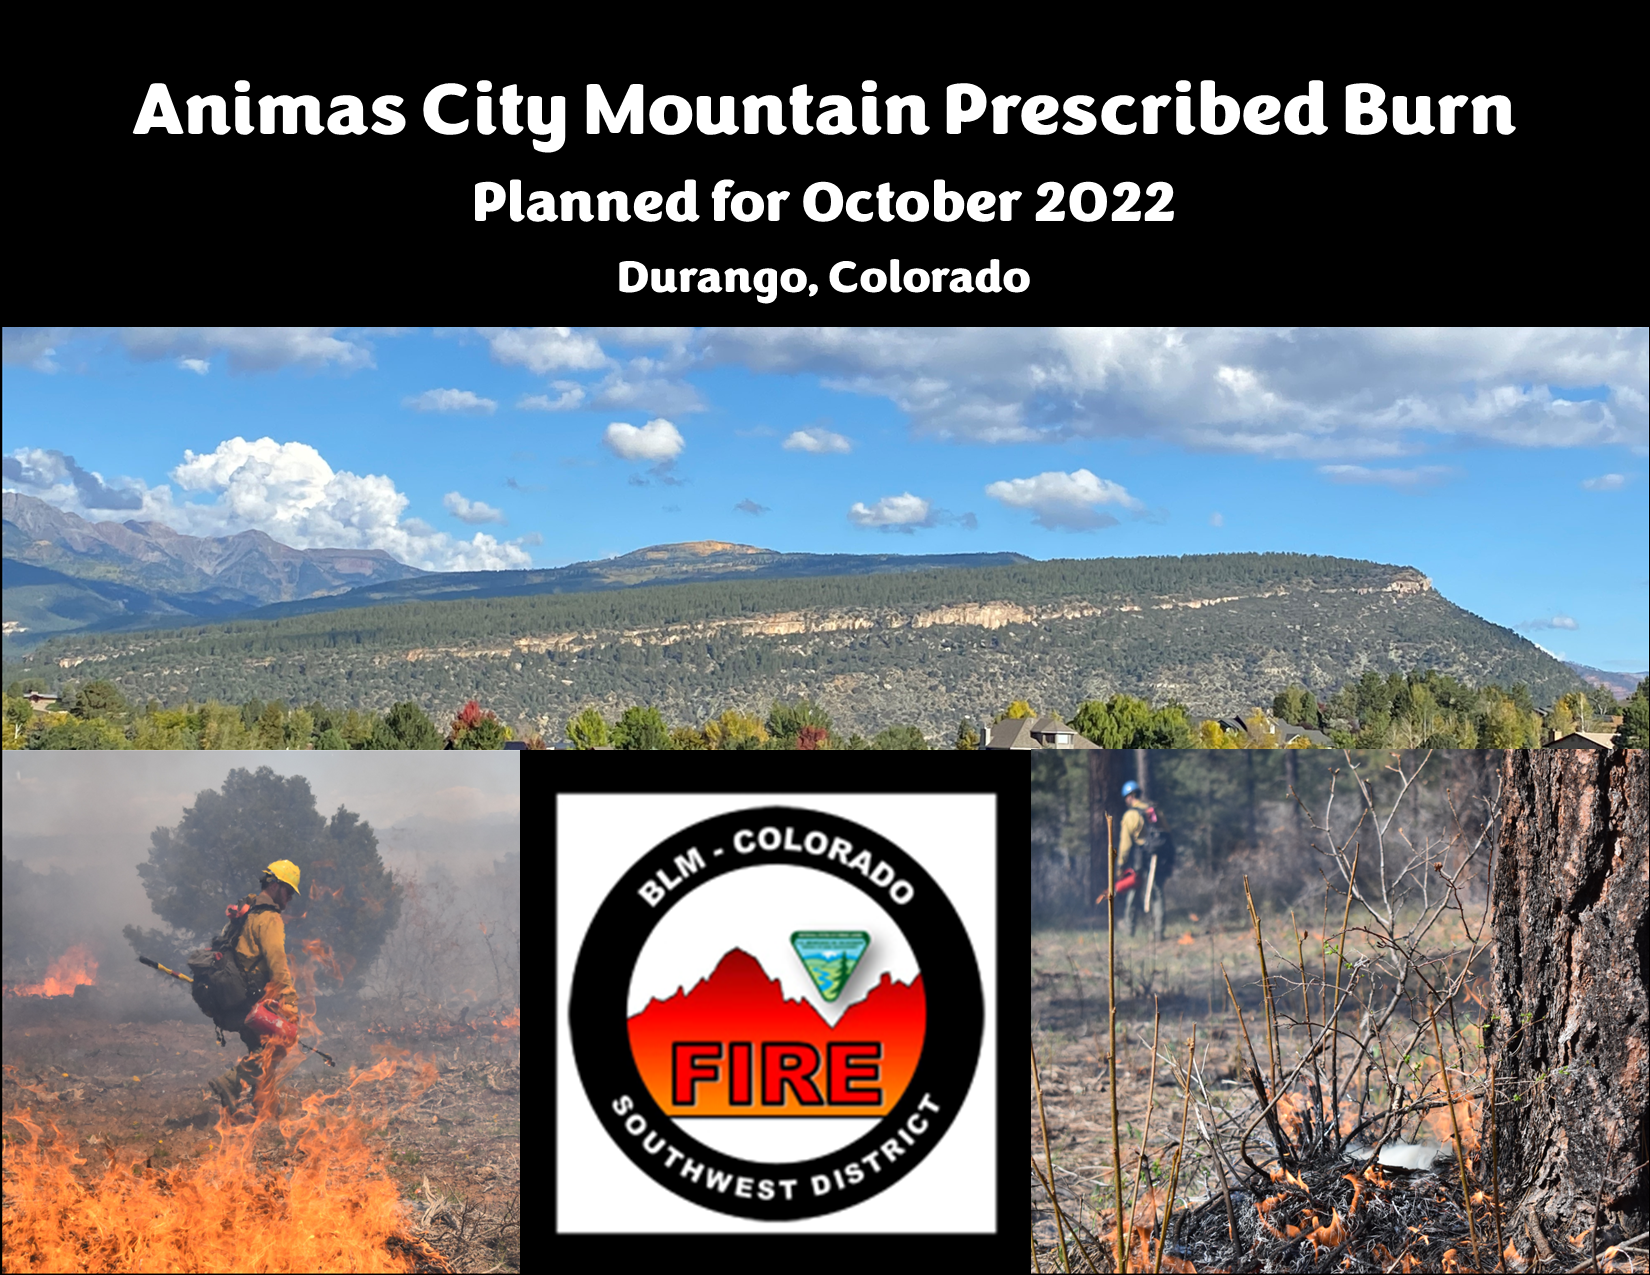 BLM Colorado Southwest District Animas City Mountain Prescribed Burn Planned October 2022